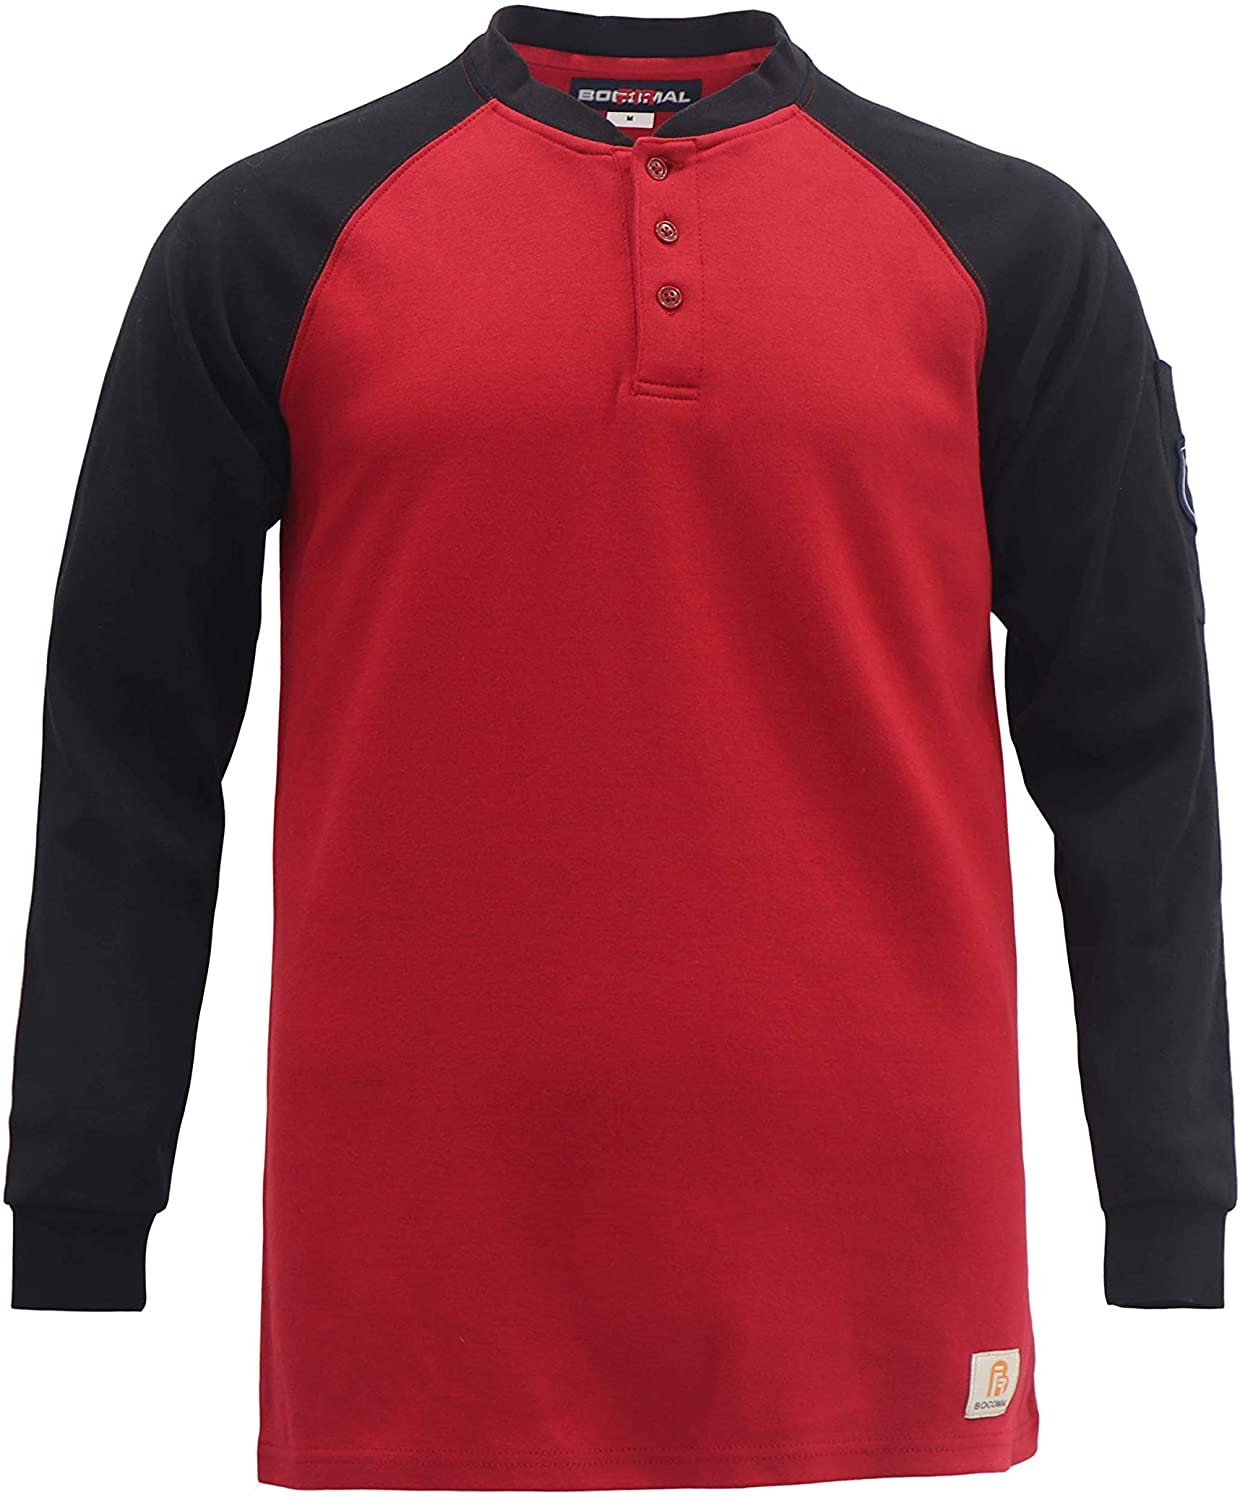 TICOMELA FR Shirts for Men NFPA2112 Flame Resistant Shirts 7oz Fire Retardant Men's Henley Shirt 